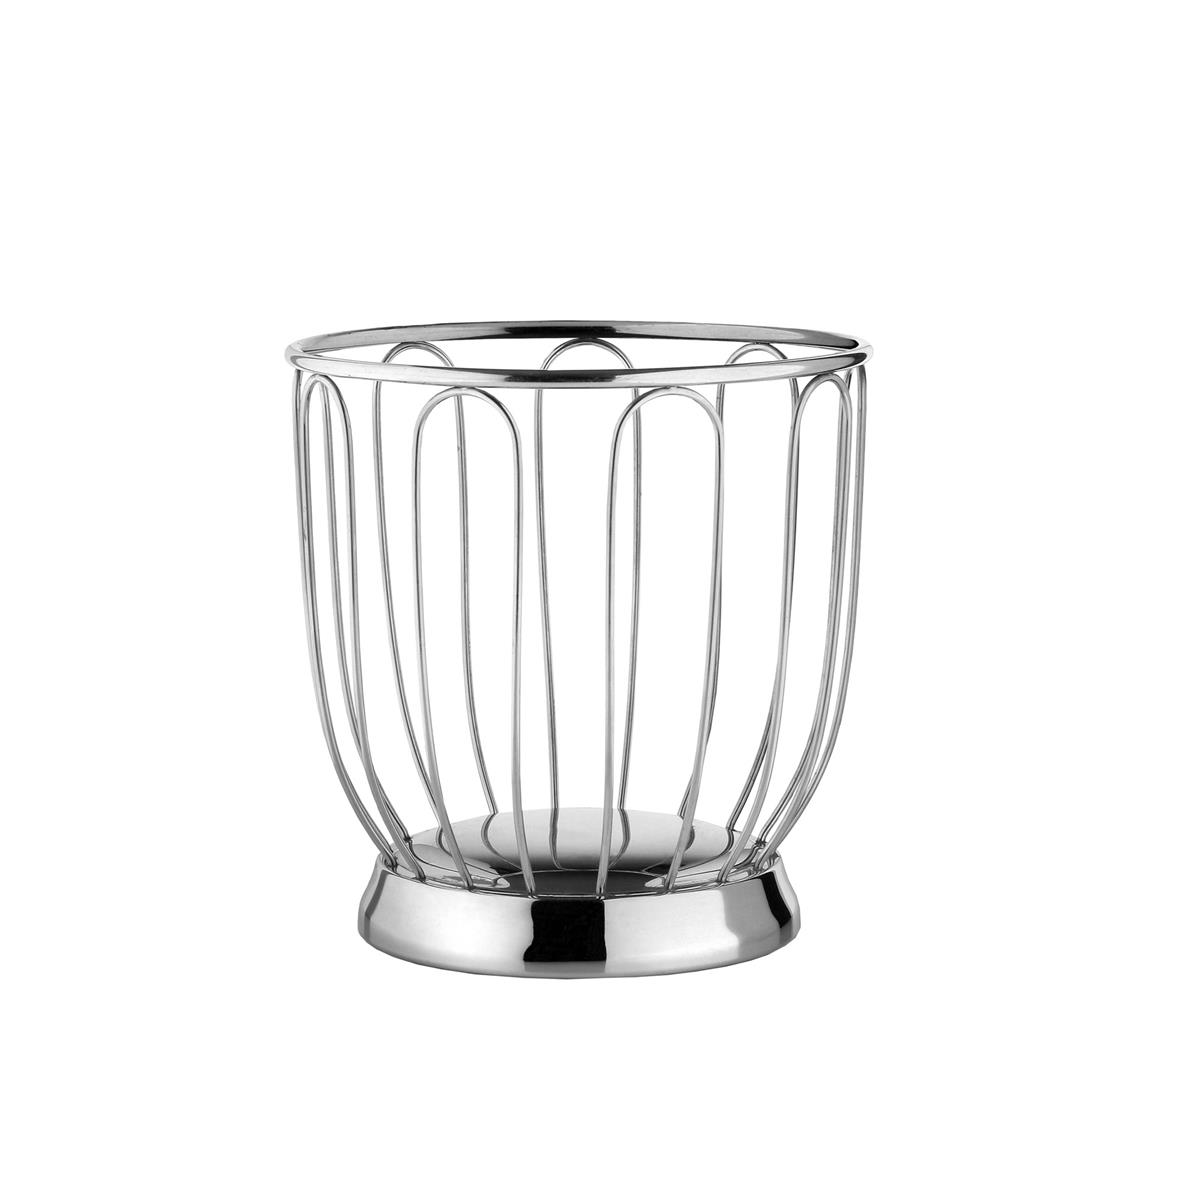 Alessi-Barket Round basket in 18/10 stainless steel